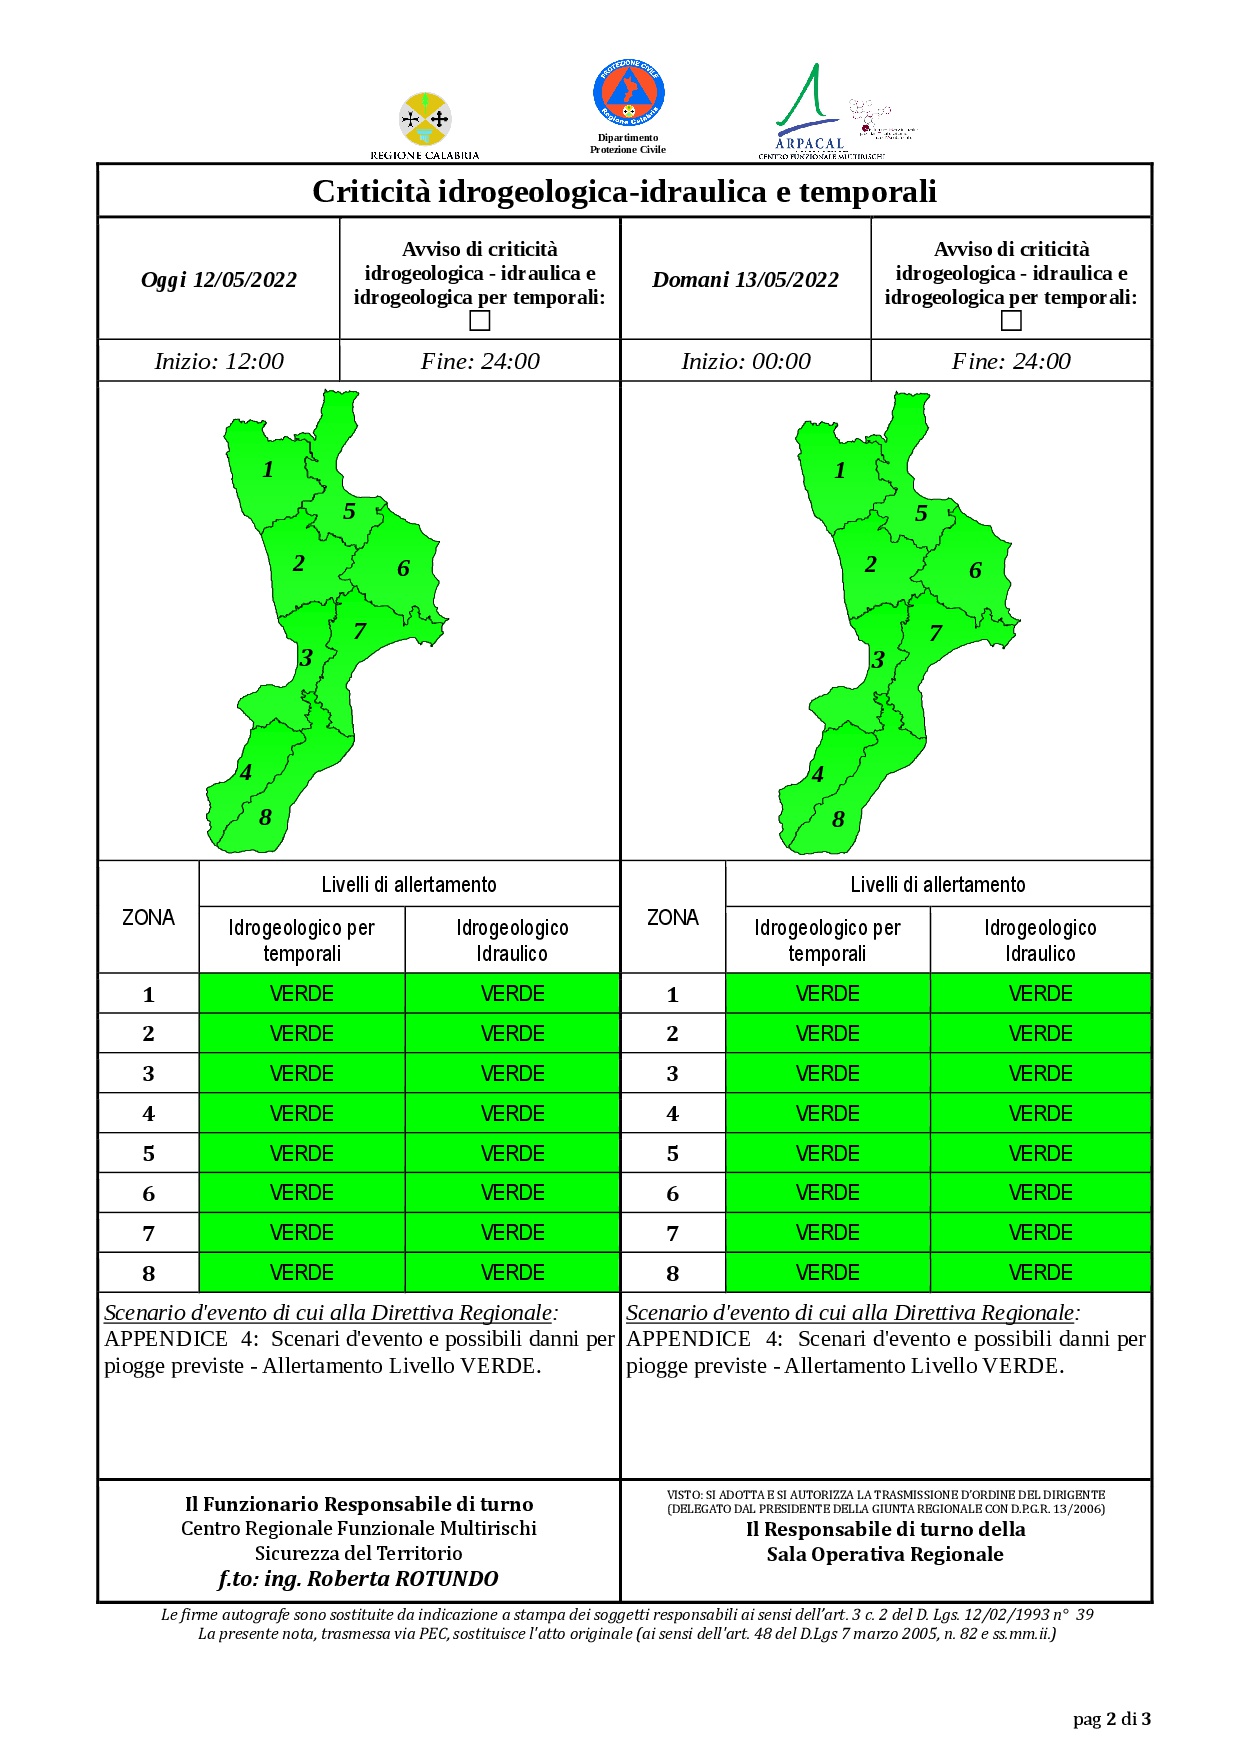 Criticità idrogeologica-idraulica e temporali in Calabria 12-05-2022